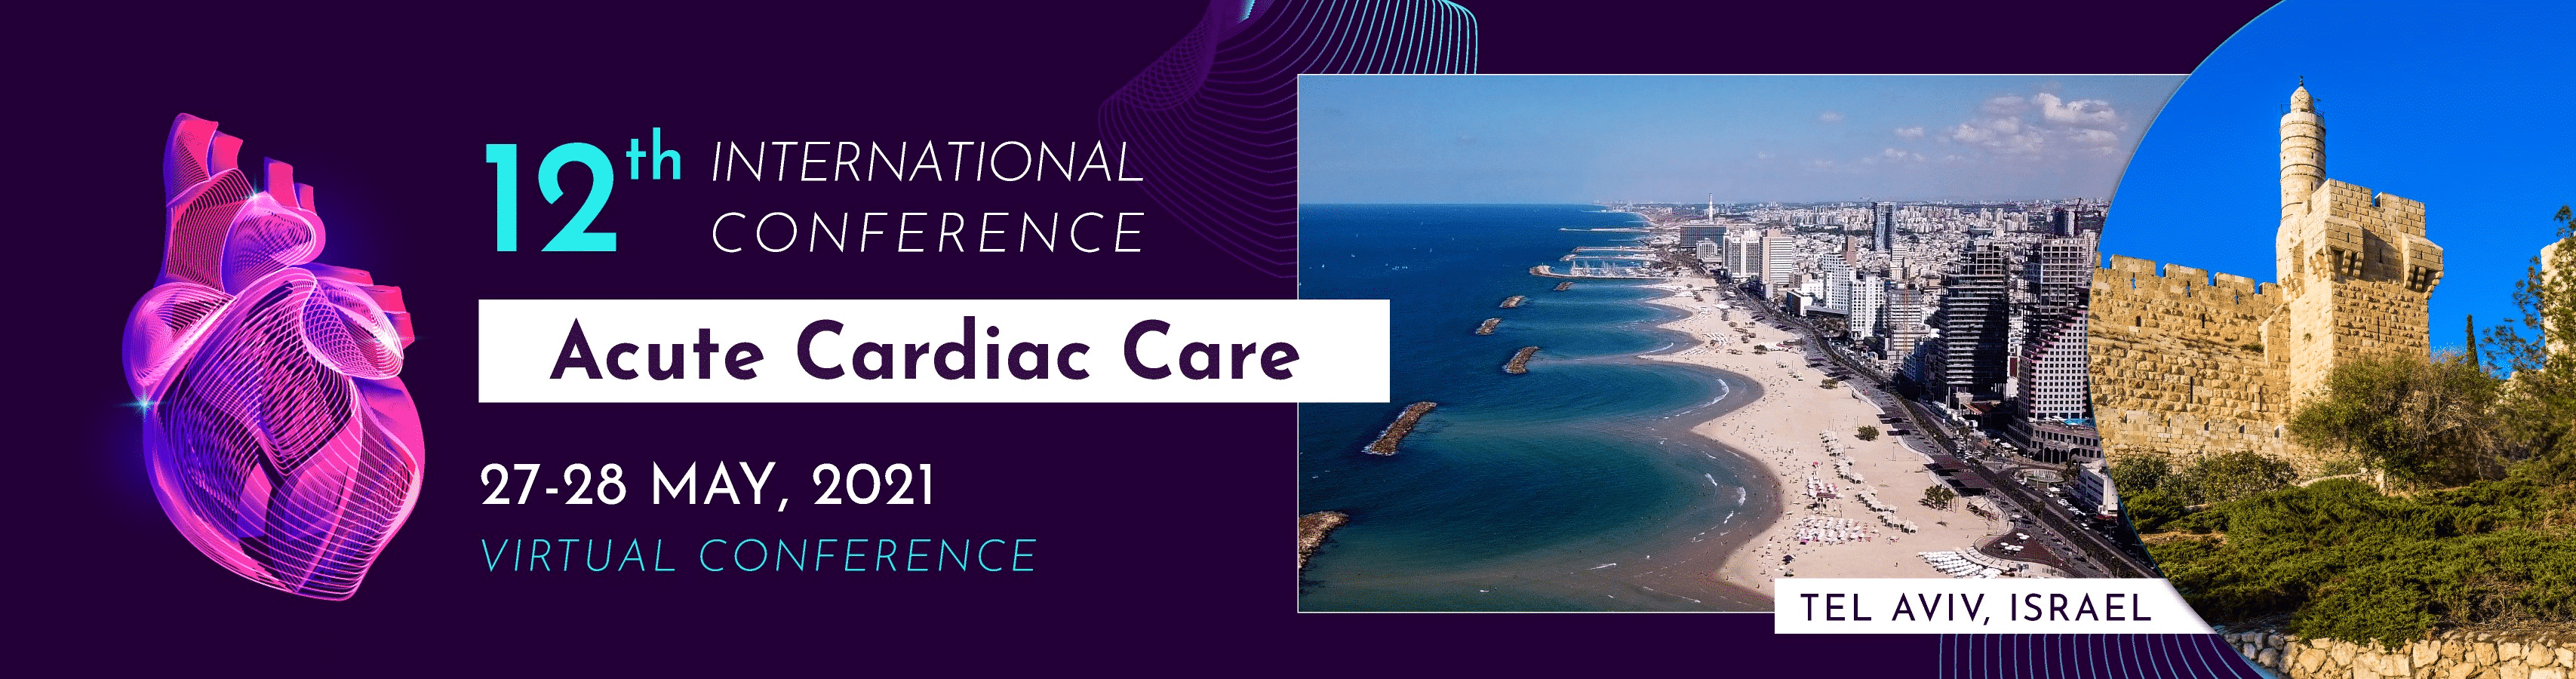 Acute Cardiac Care Conference 2021